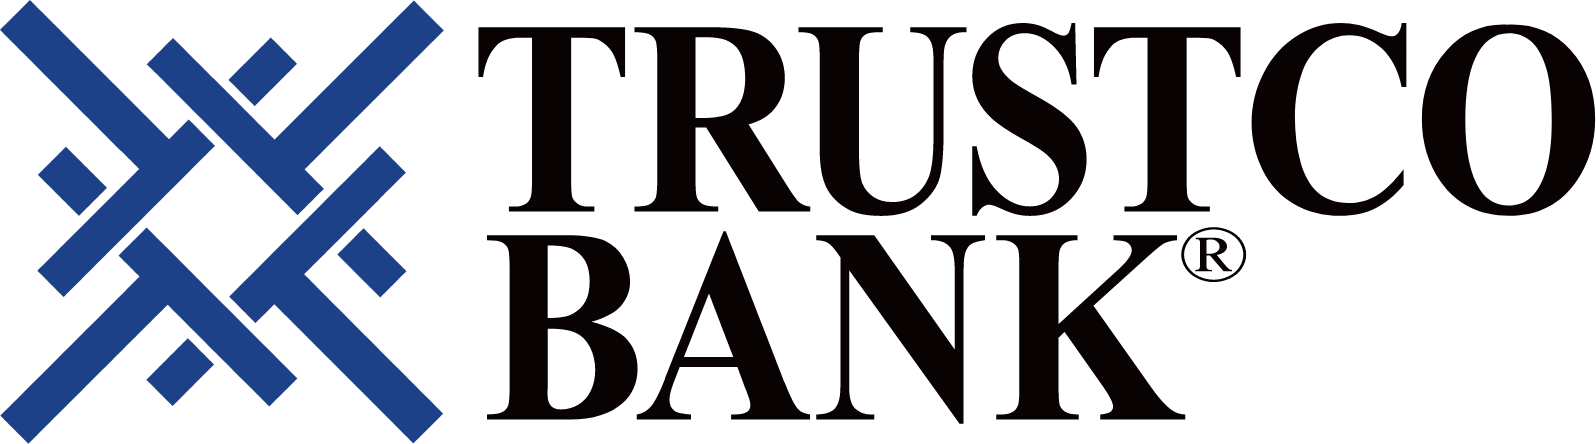 TrustCo Bank logo large (transparent PNG)